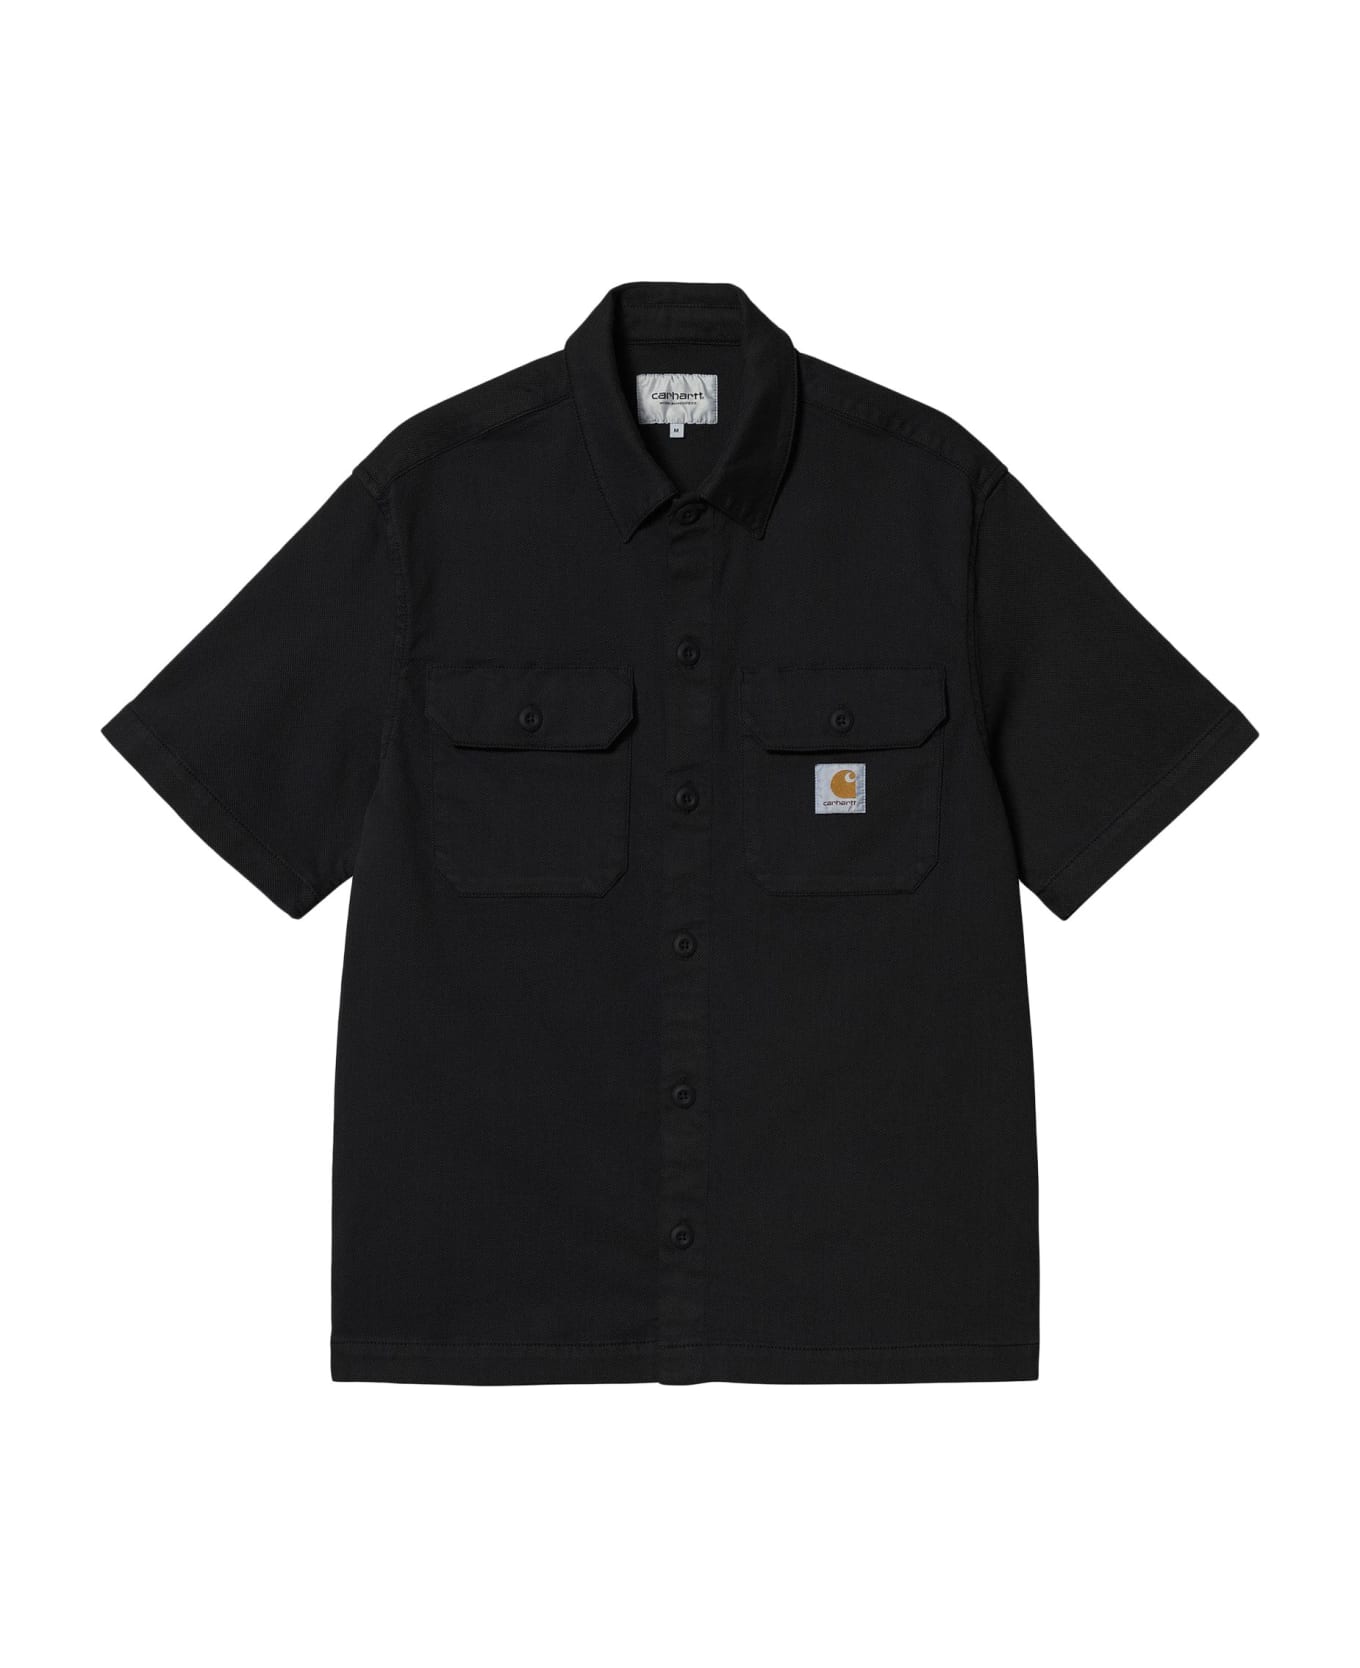 Carhartt Shirts Black - Black